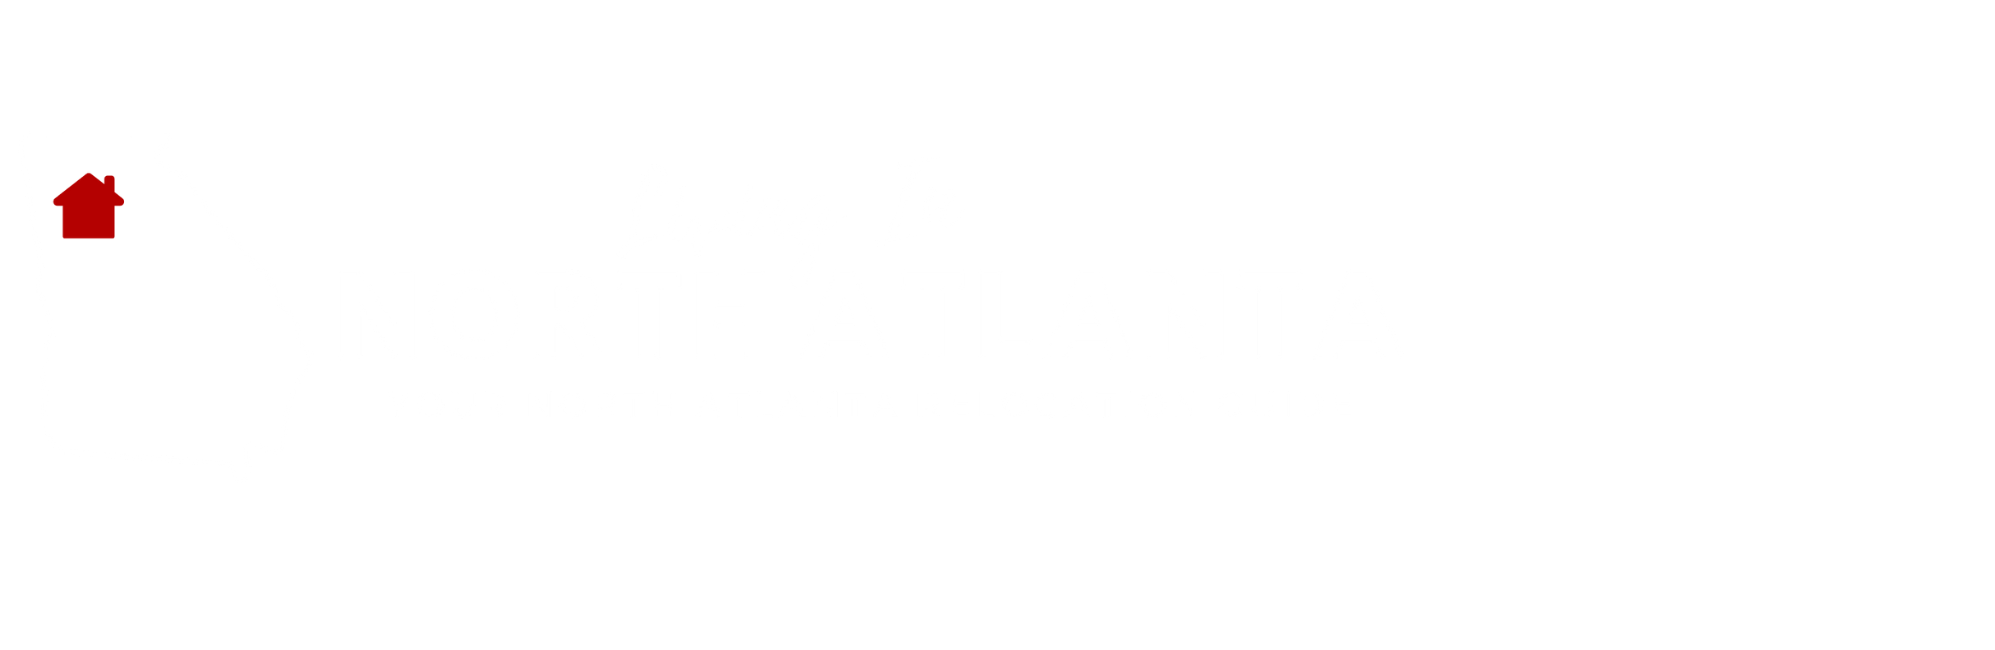 North Atlanta Relocation Guide - The Subacz Team